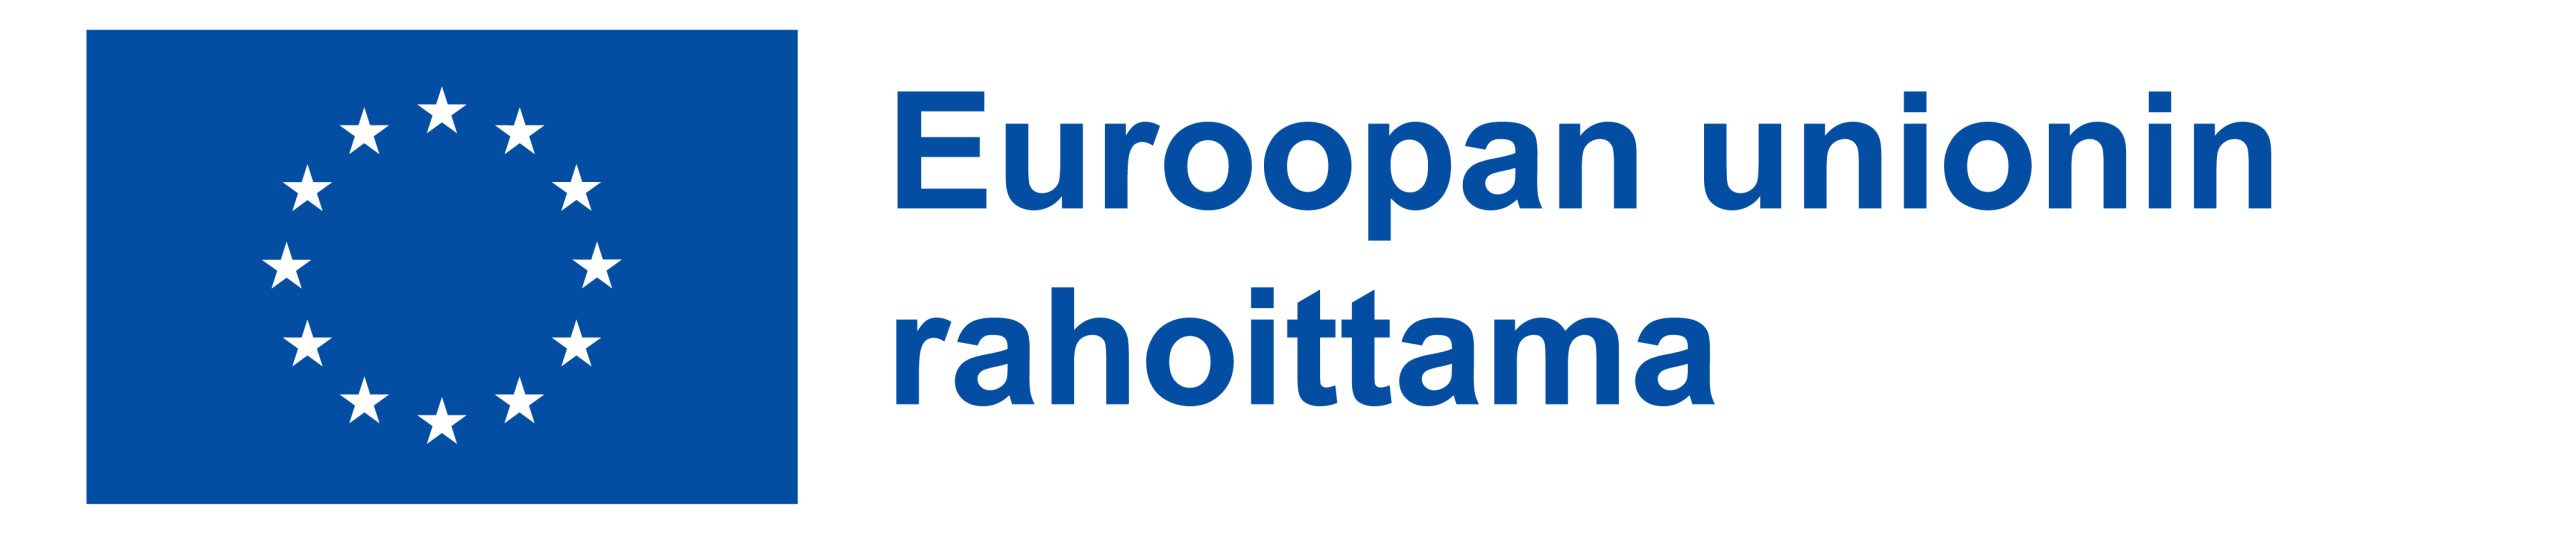 EU:n logo eli EU:n lippu ja teksti Euroopan unionin rahoittama